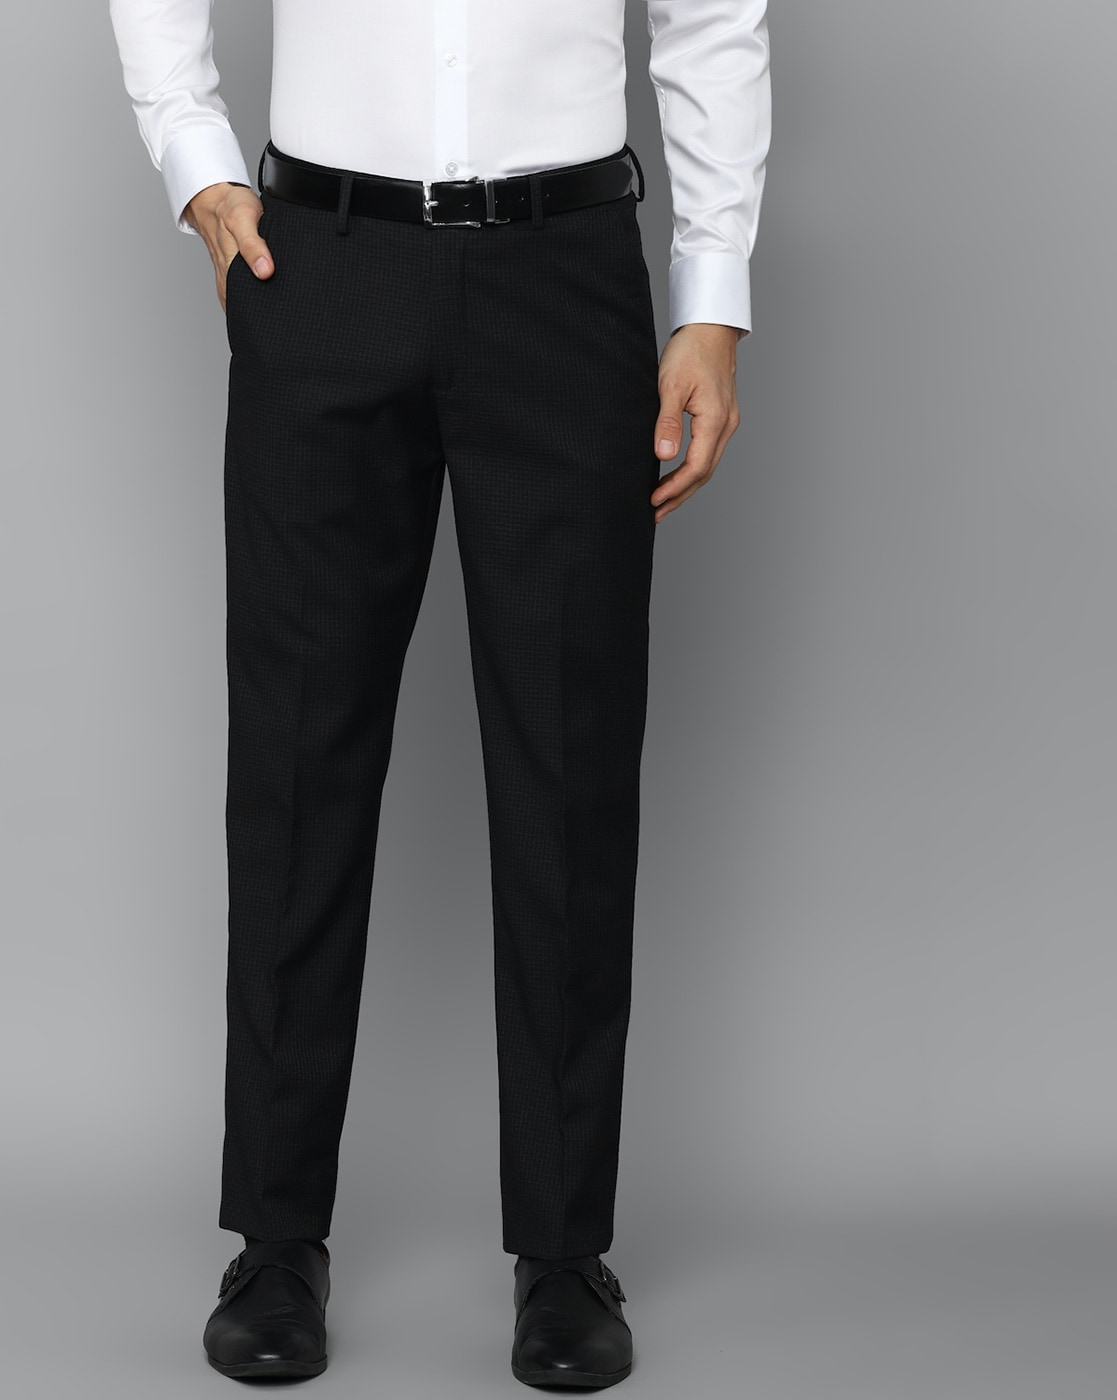 John Lewis Slim Bi-Stretch Trousers, Black at John Lewis & Partners